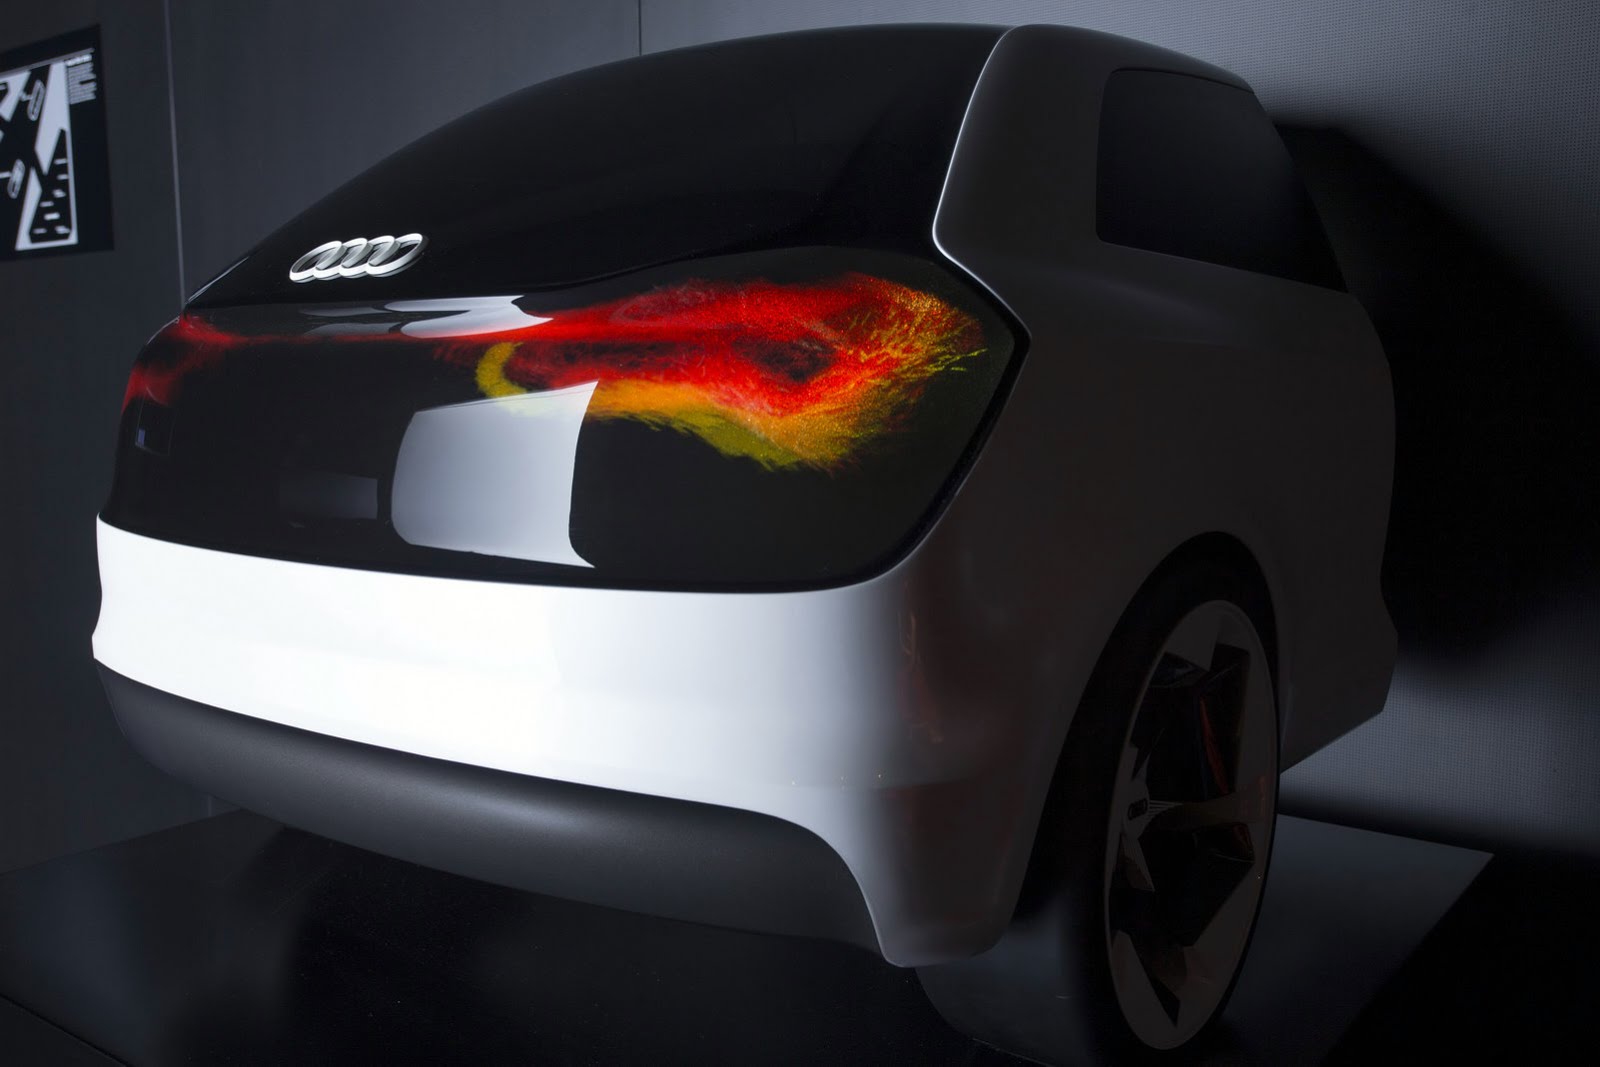 Audi’s new lighting and autonomous driving tech